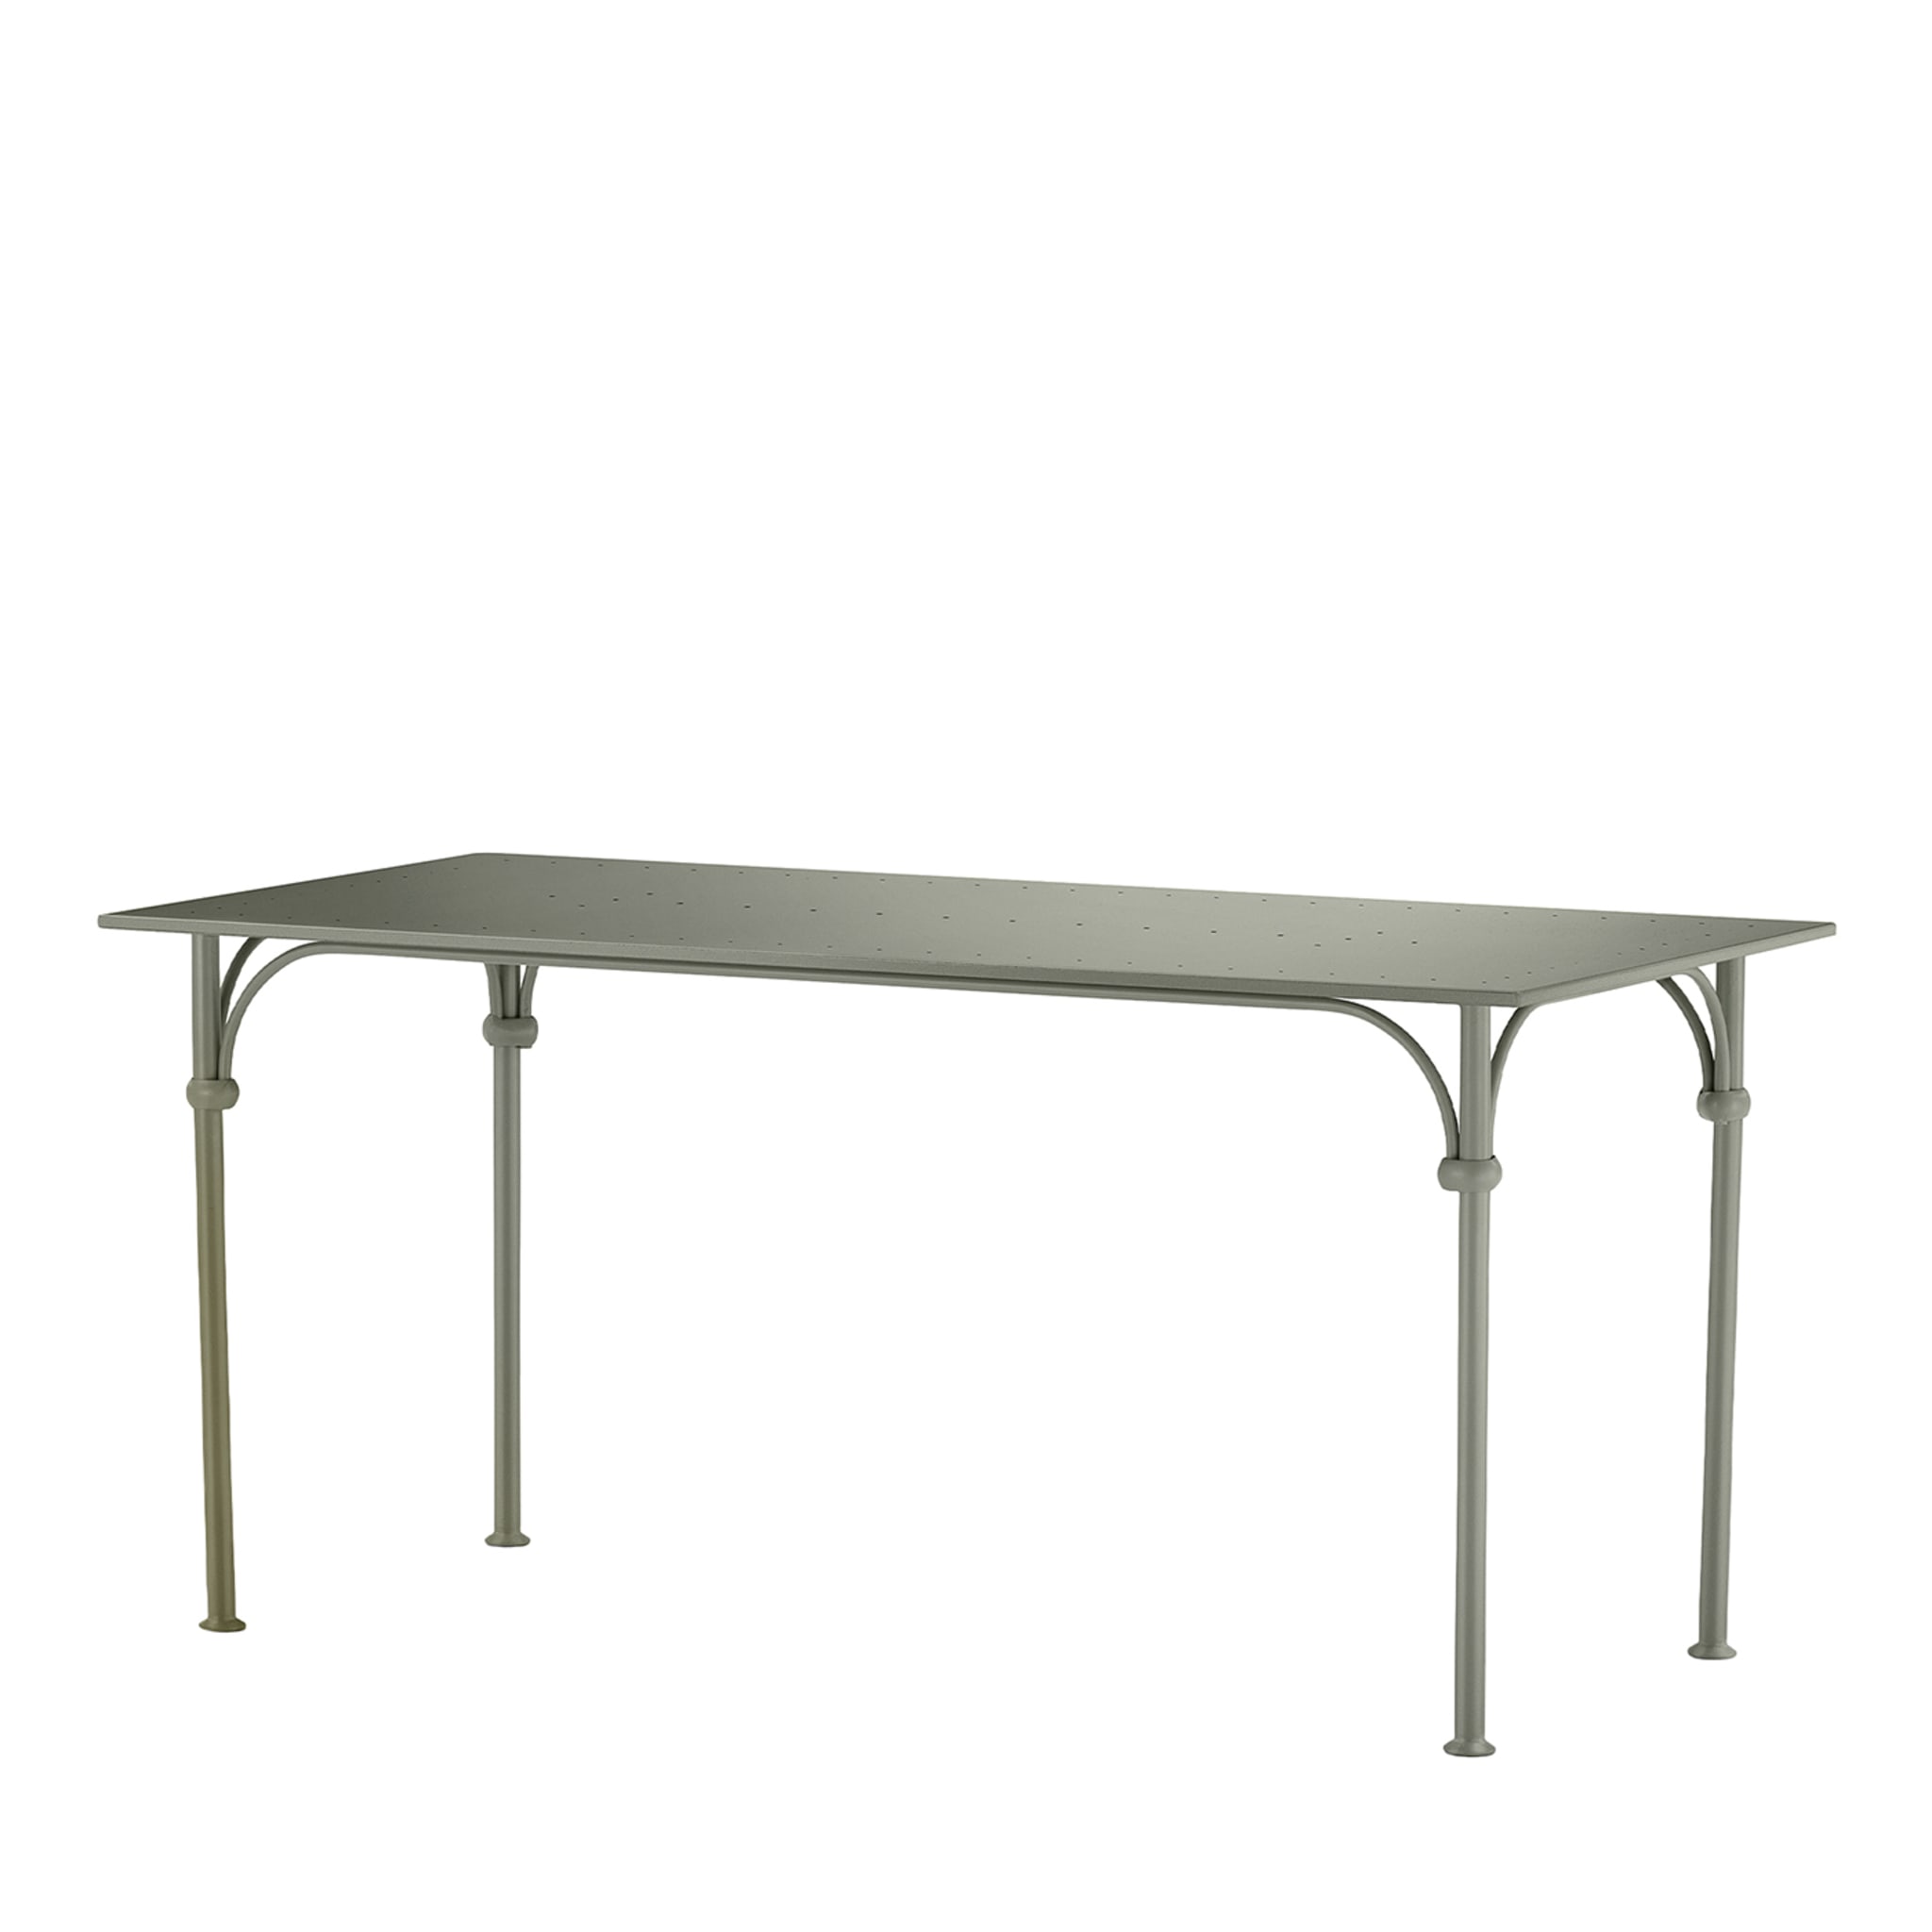 Tavolario Wrought Iron Sage-Green Rectangular Table - Main view